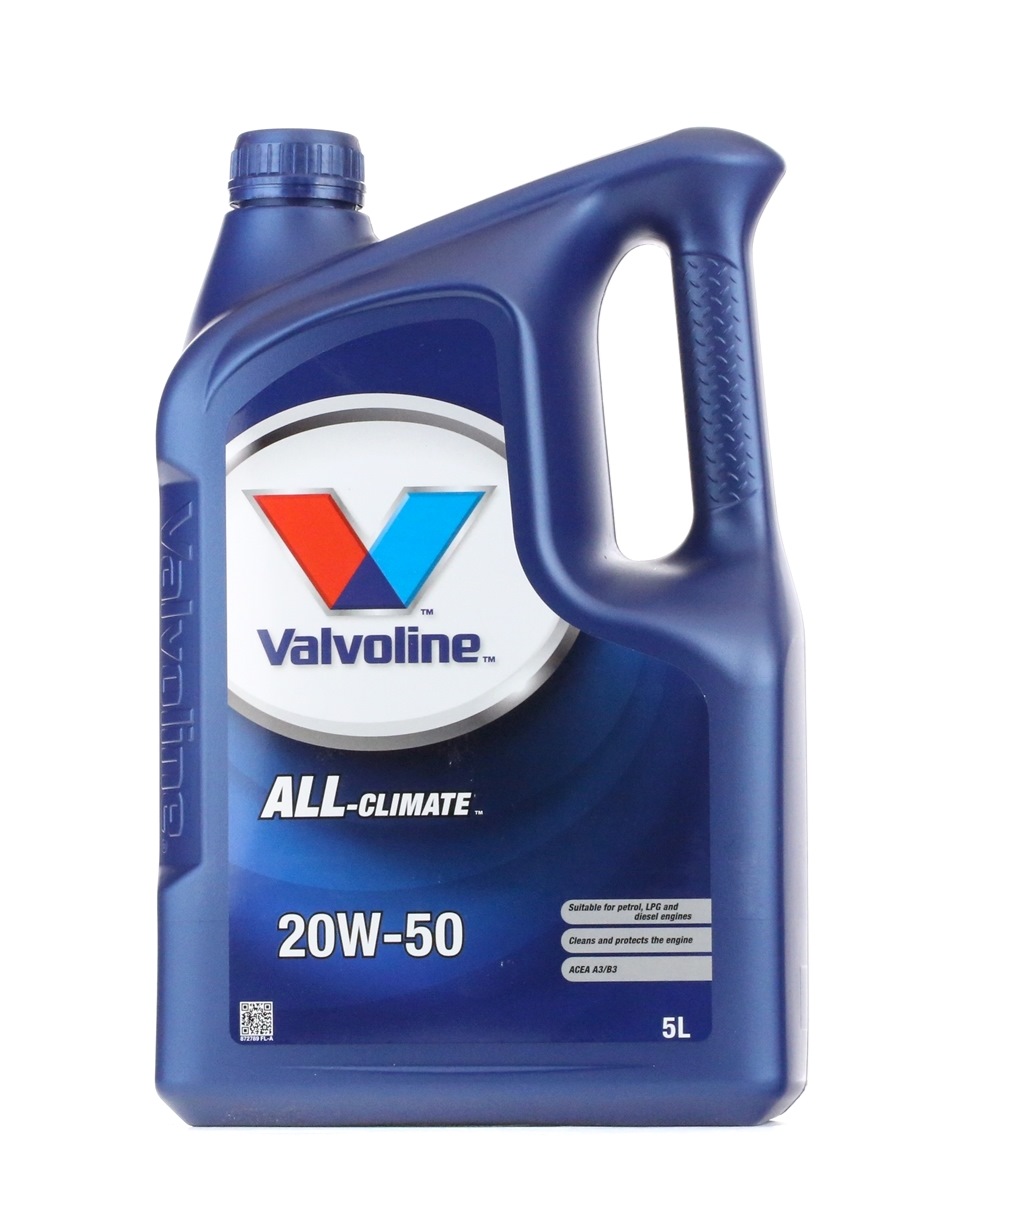 Valvoline All-Climate 872789 Motoröl 20W-50, 5l, Mineralöl